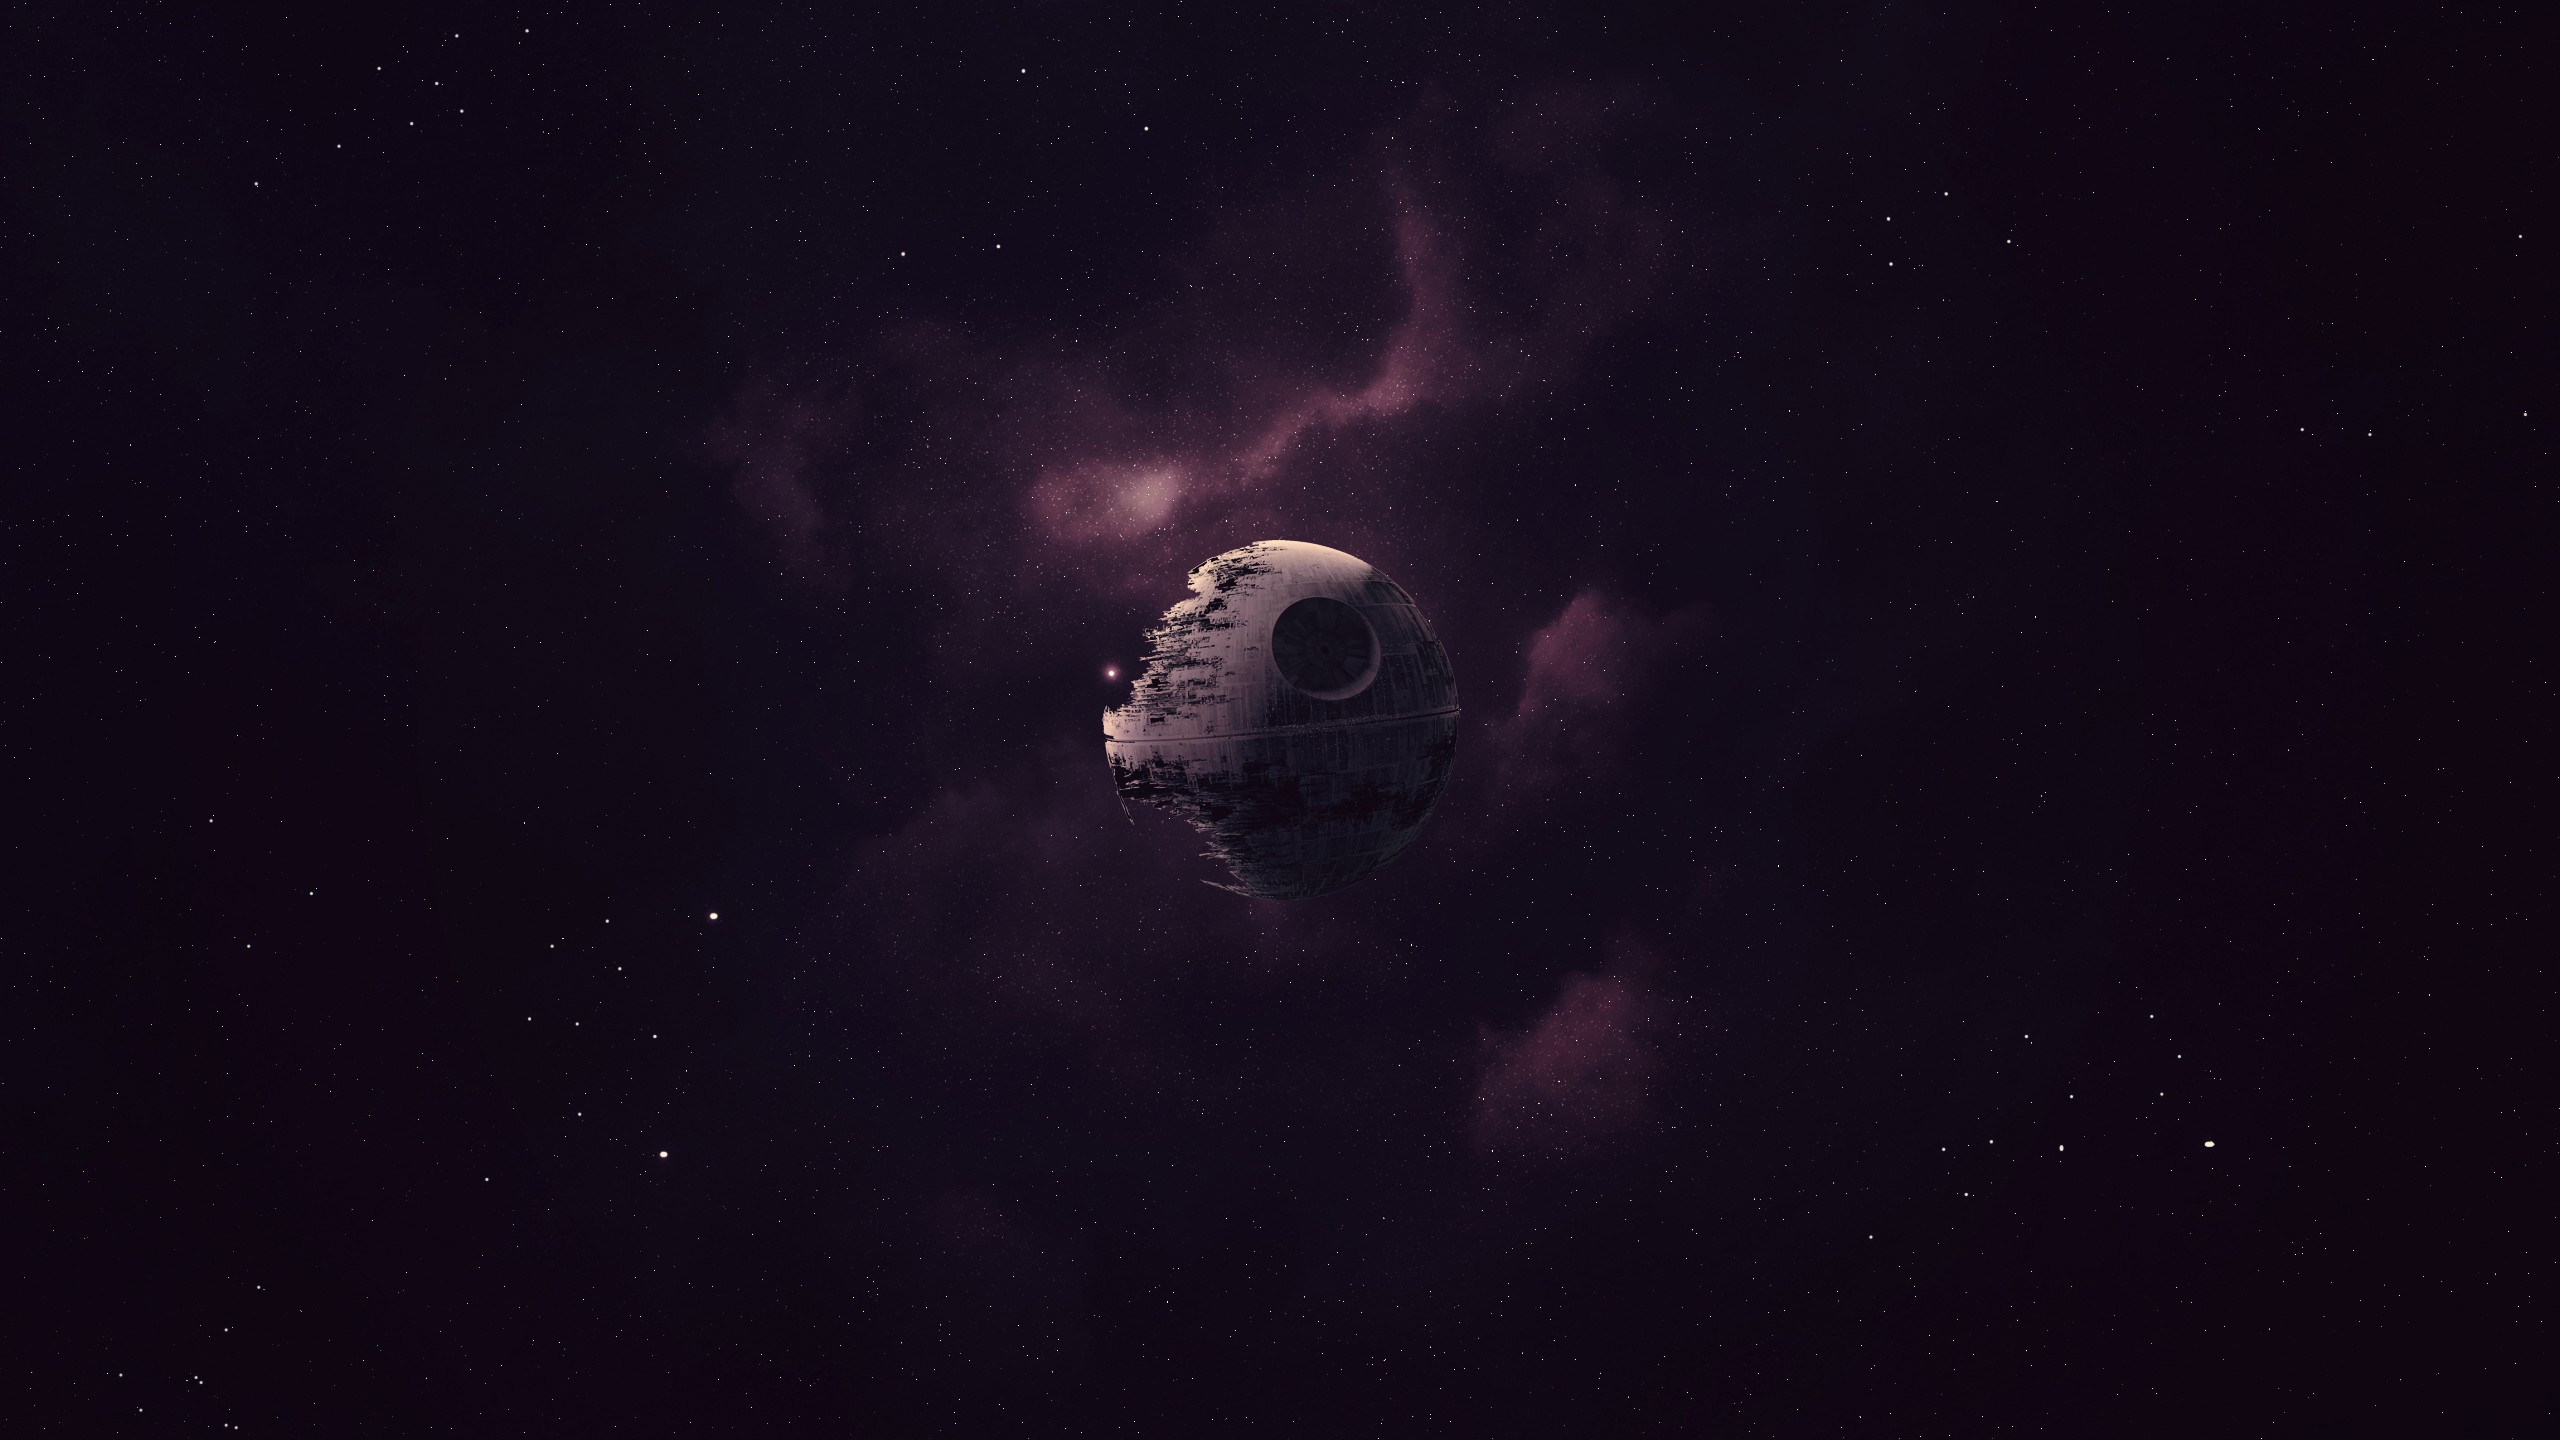 General 2560x1440 Star Wars Death Star artwork space purple Star Wars: Episode VI - The Return of the Jedi science fiction space art